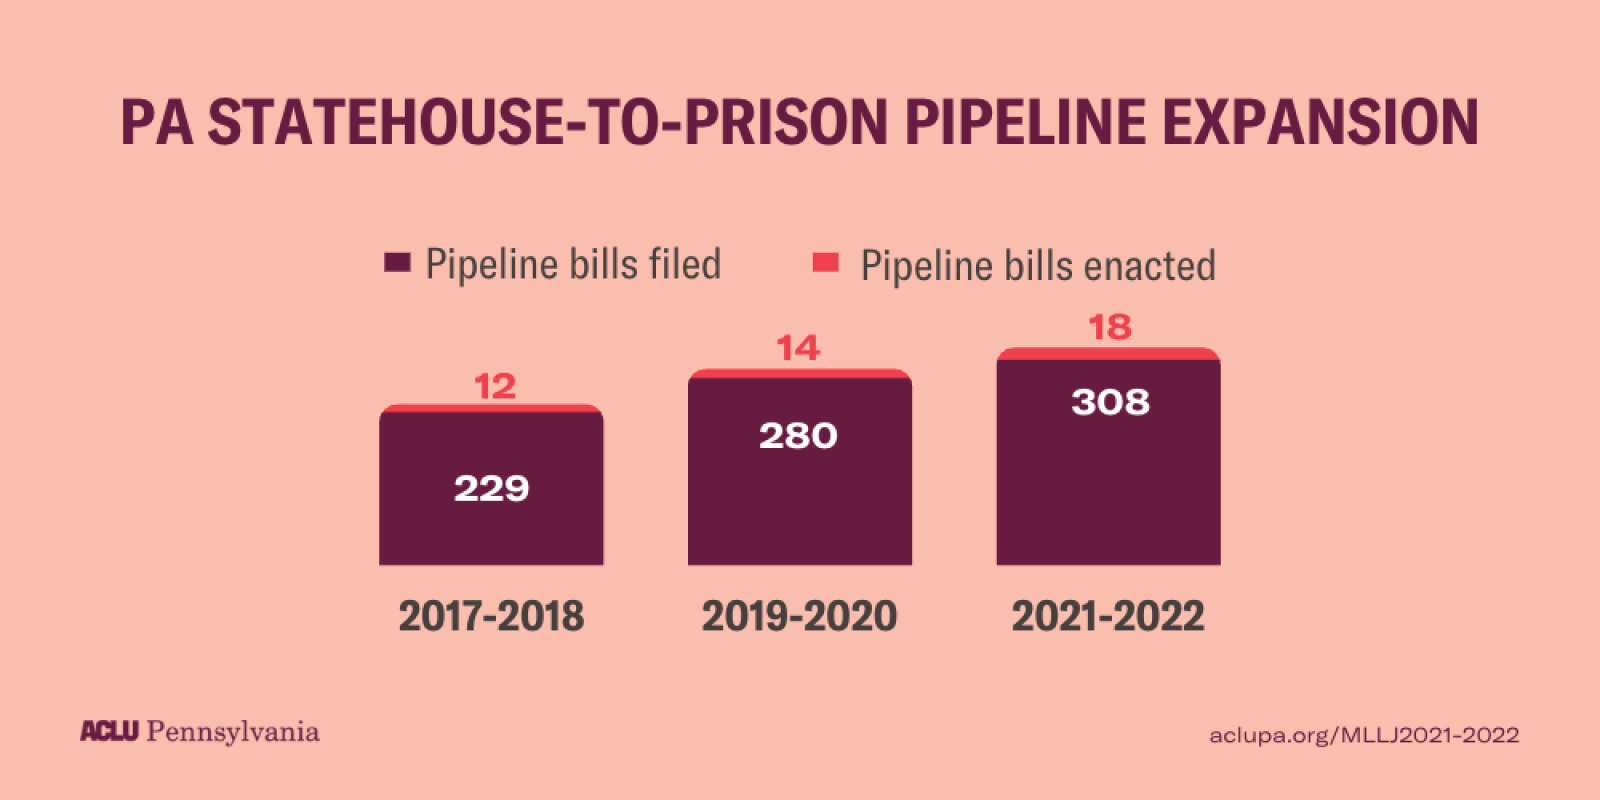 MLLJ 2021-2022 | Pipeline expansion filed vs enacted